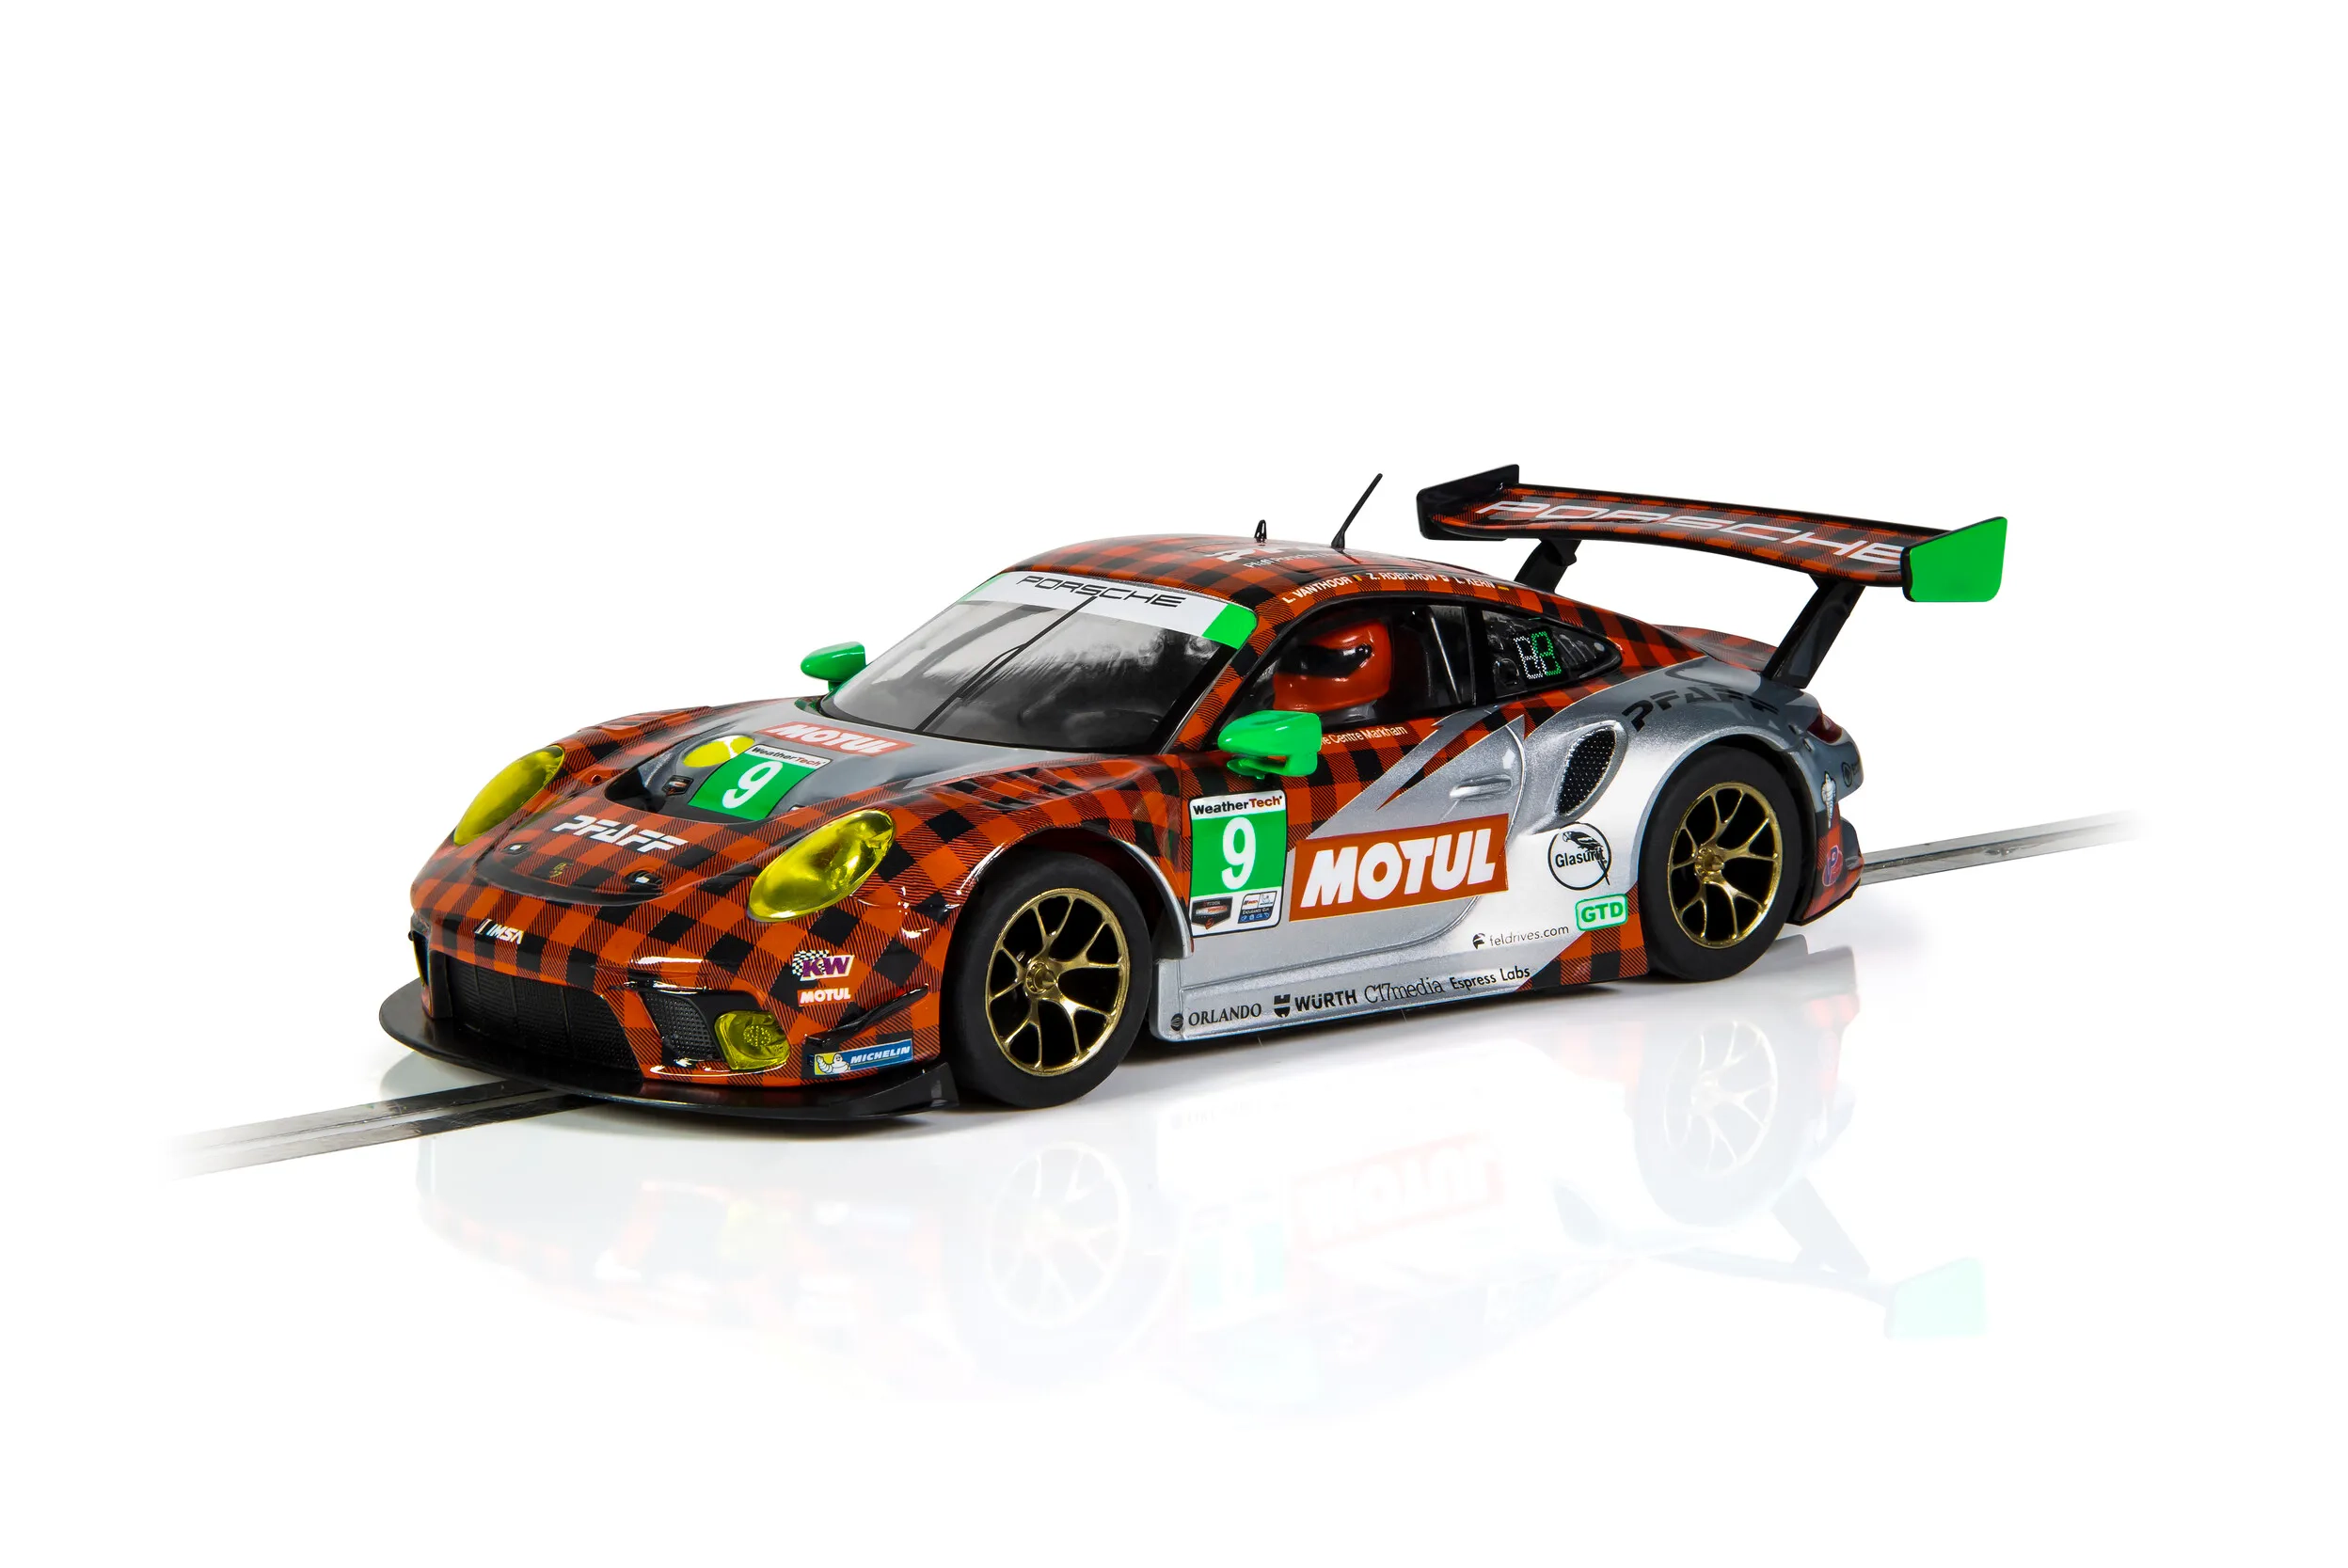 Porsche 911 GT3 R - Sebring 12 hours 2021 -PFAFF Motorsports